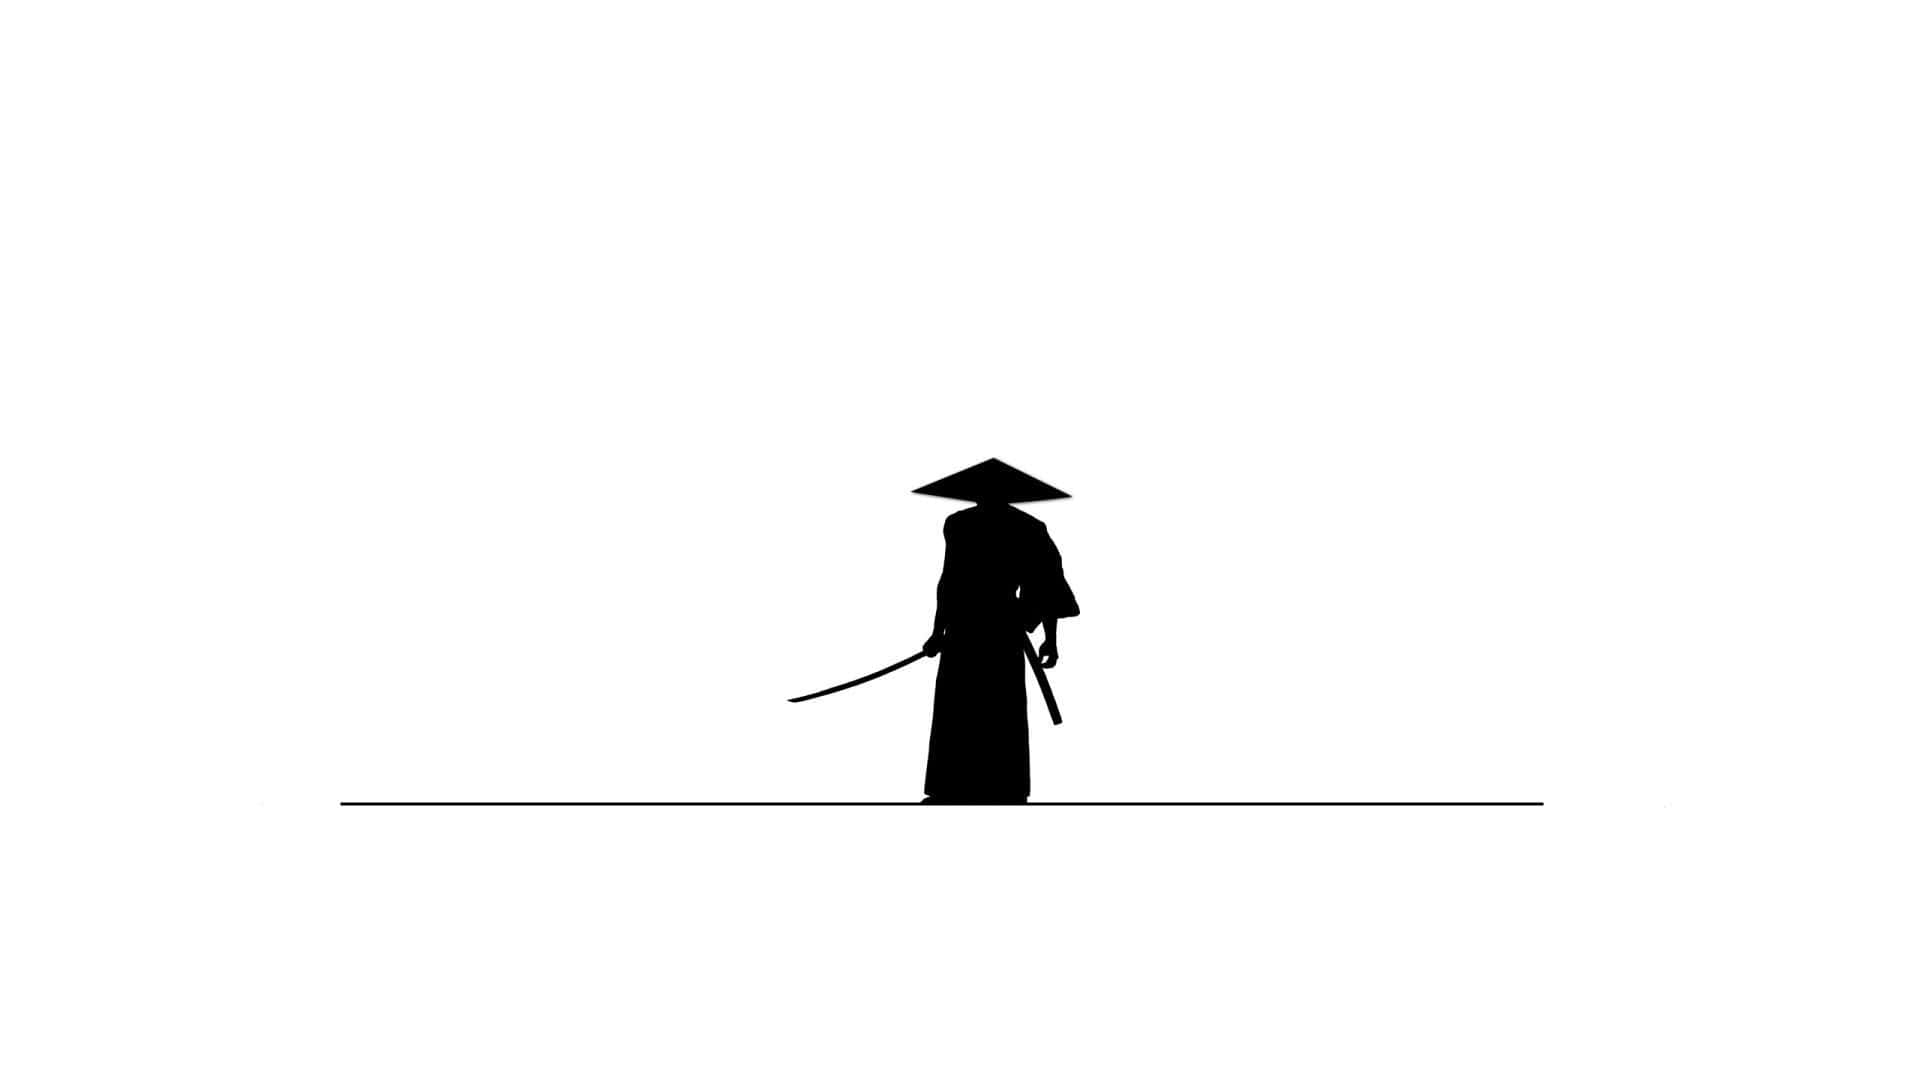 The fierce Samurai Jack standing tall in a mystic forest